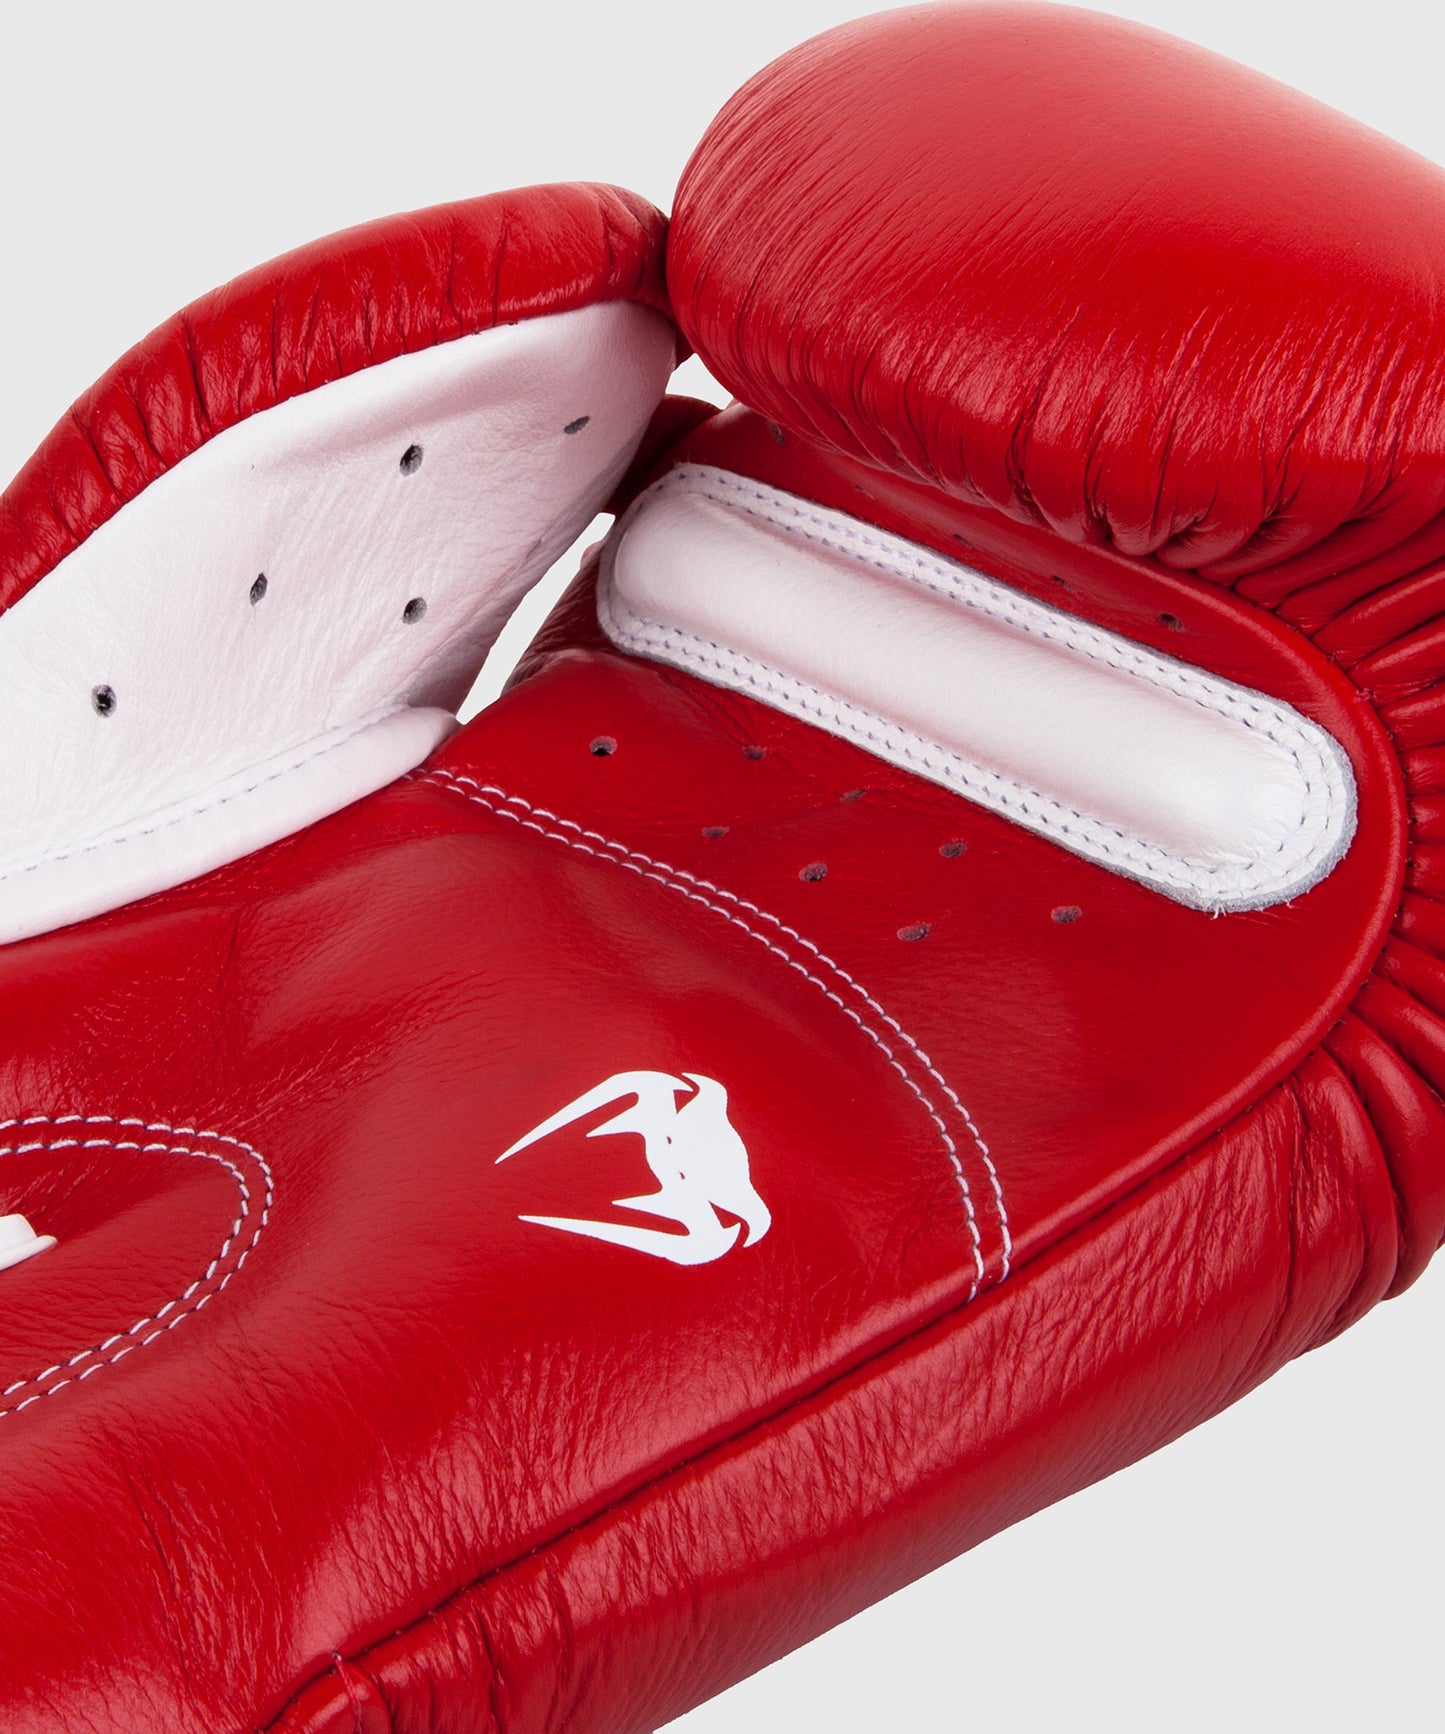 Guantes de boxeo Venum Giant 3.0 Boxing Gloves - Cuero Nappa - Rojo